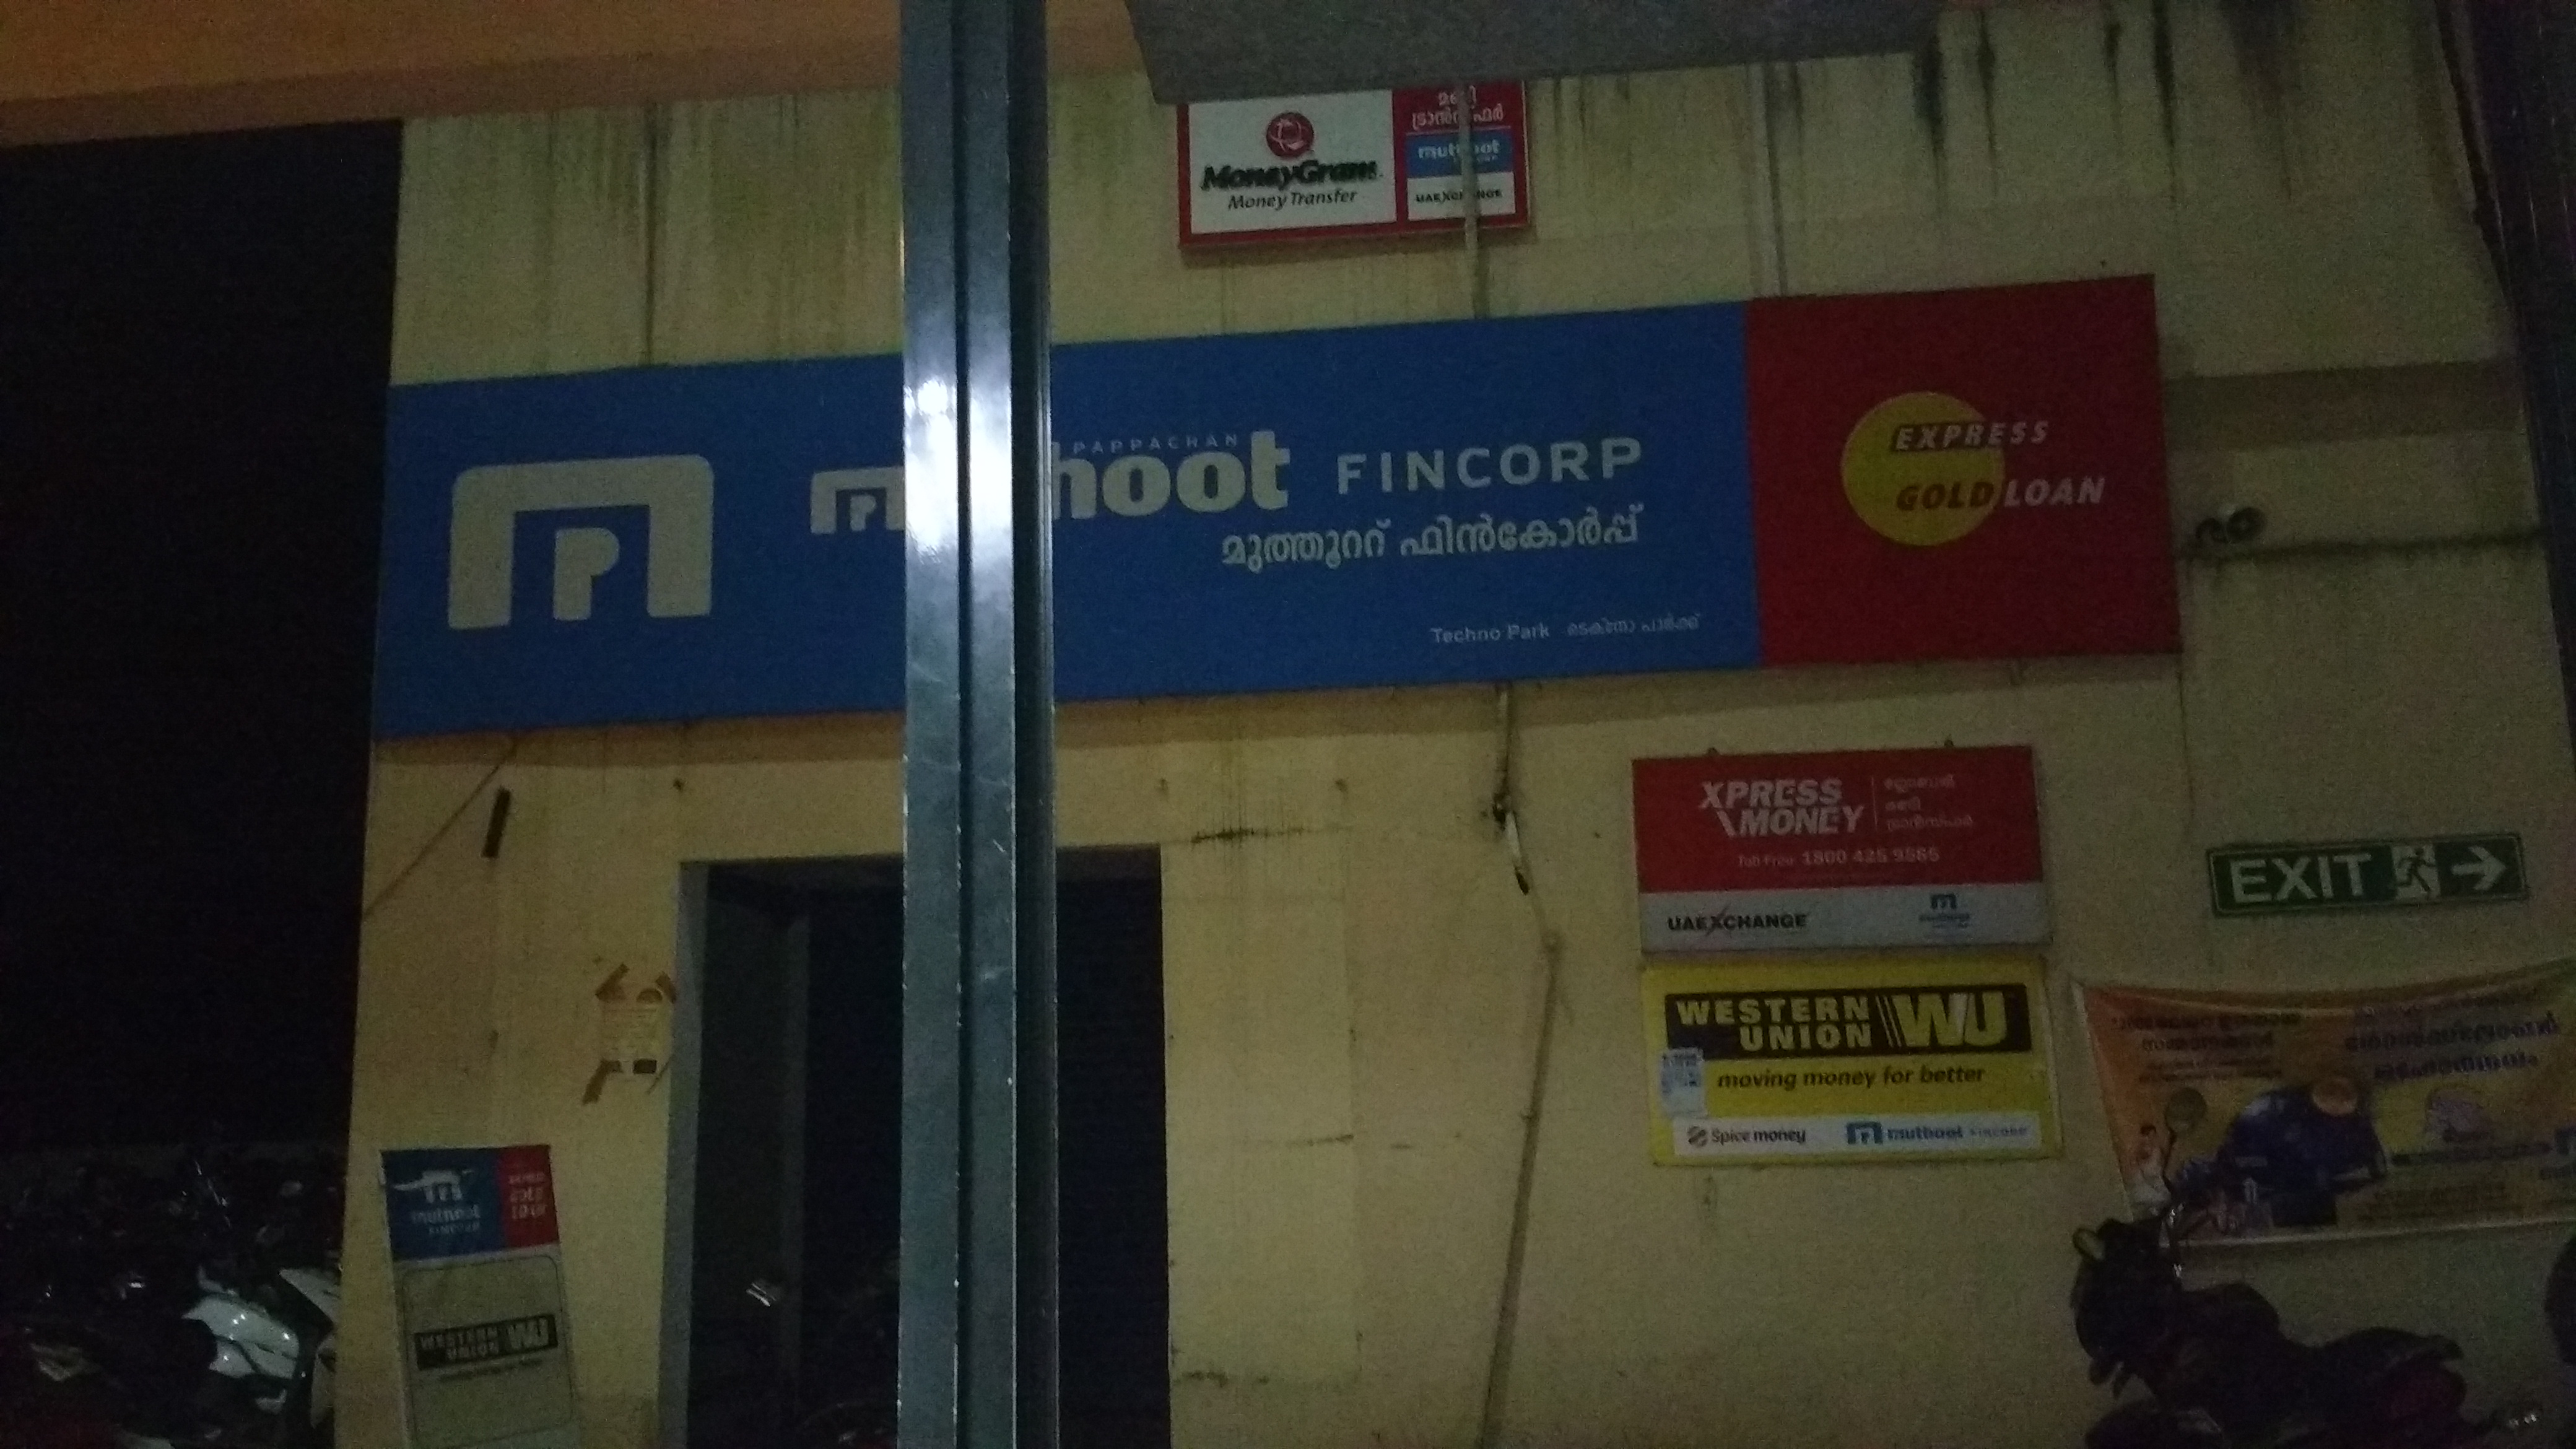 Muthoot Fincorp Gold Loan Services in Karyavattom, Thiruvananthapuram, Kerala